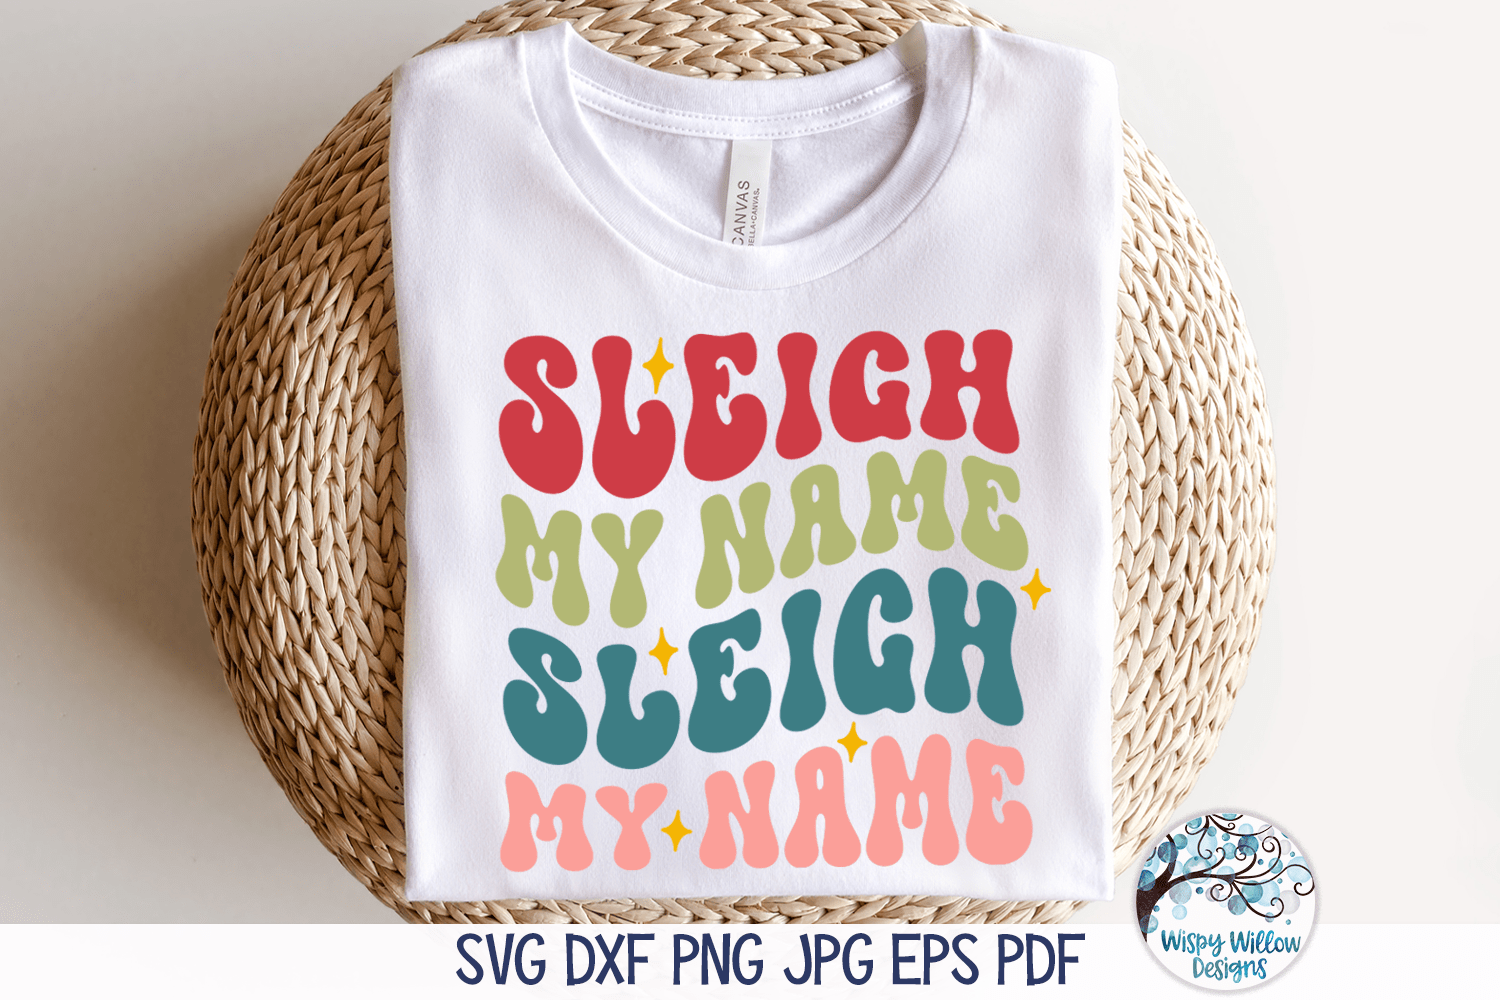 Sleigh My Name SVG | Funny Say My Name Christmas Parody Wispy Willow Designs Company